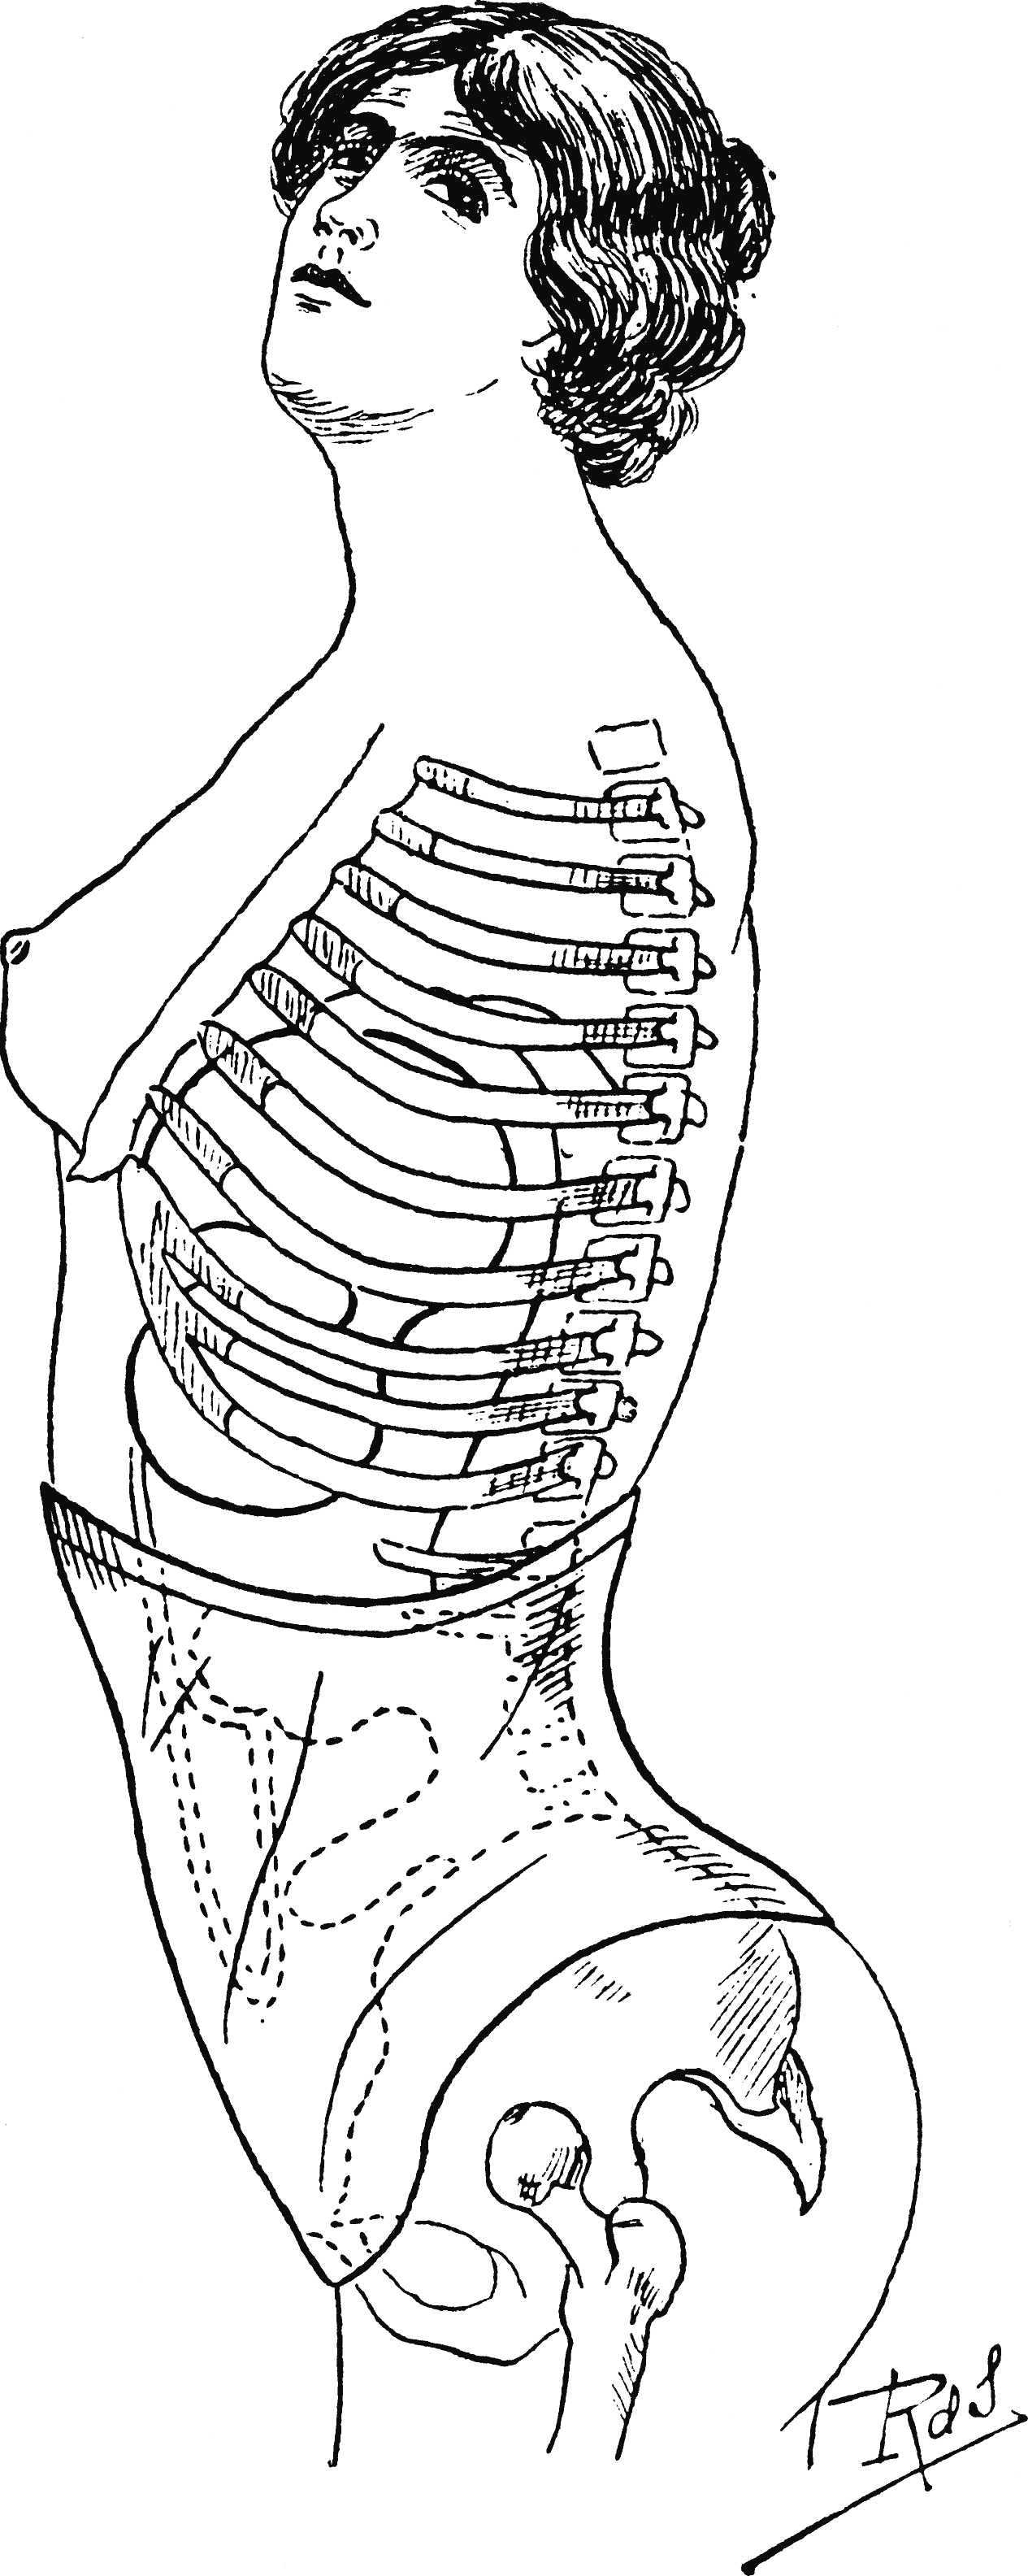 http://upload.wikimedia.org/wikipedia/commons/6/6a/Un_trone_feminin_vetu_d%27un_corset_abdominal.gif